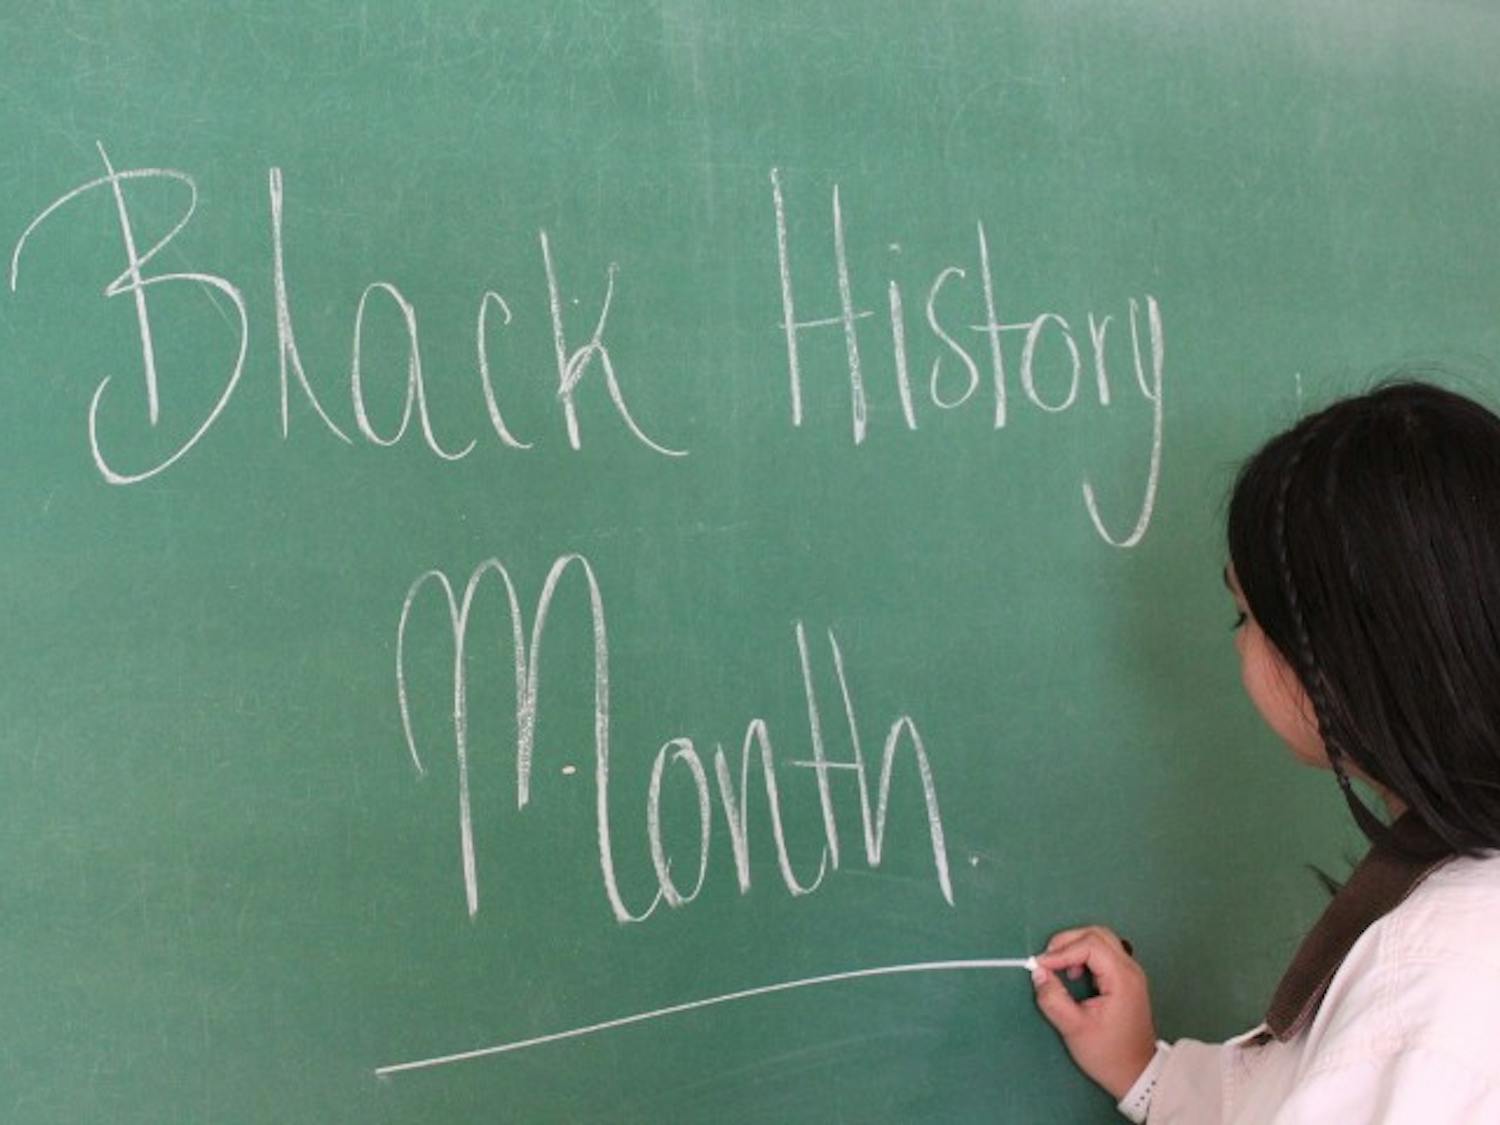 Black History Month education.JPG